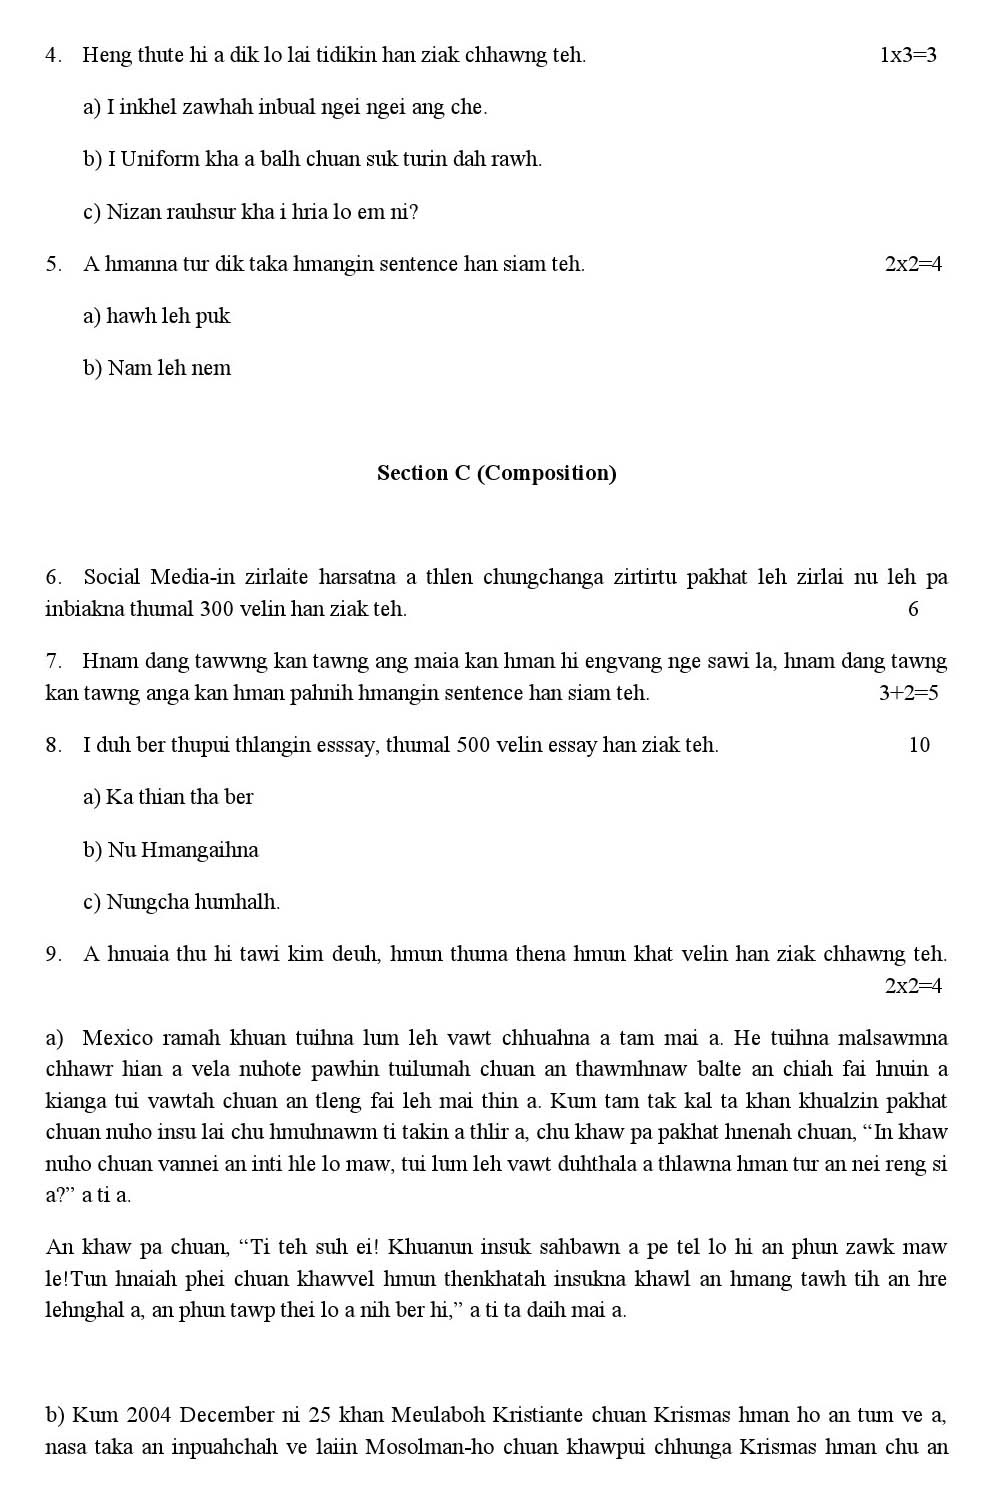 Mizo CBSE Class X Sample Question Paper 2018-19 - Image 3